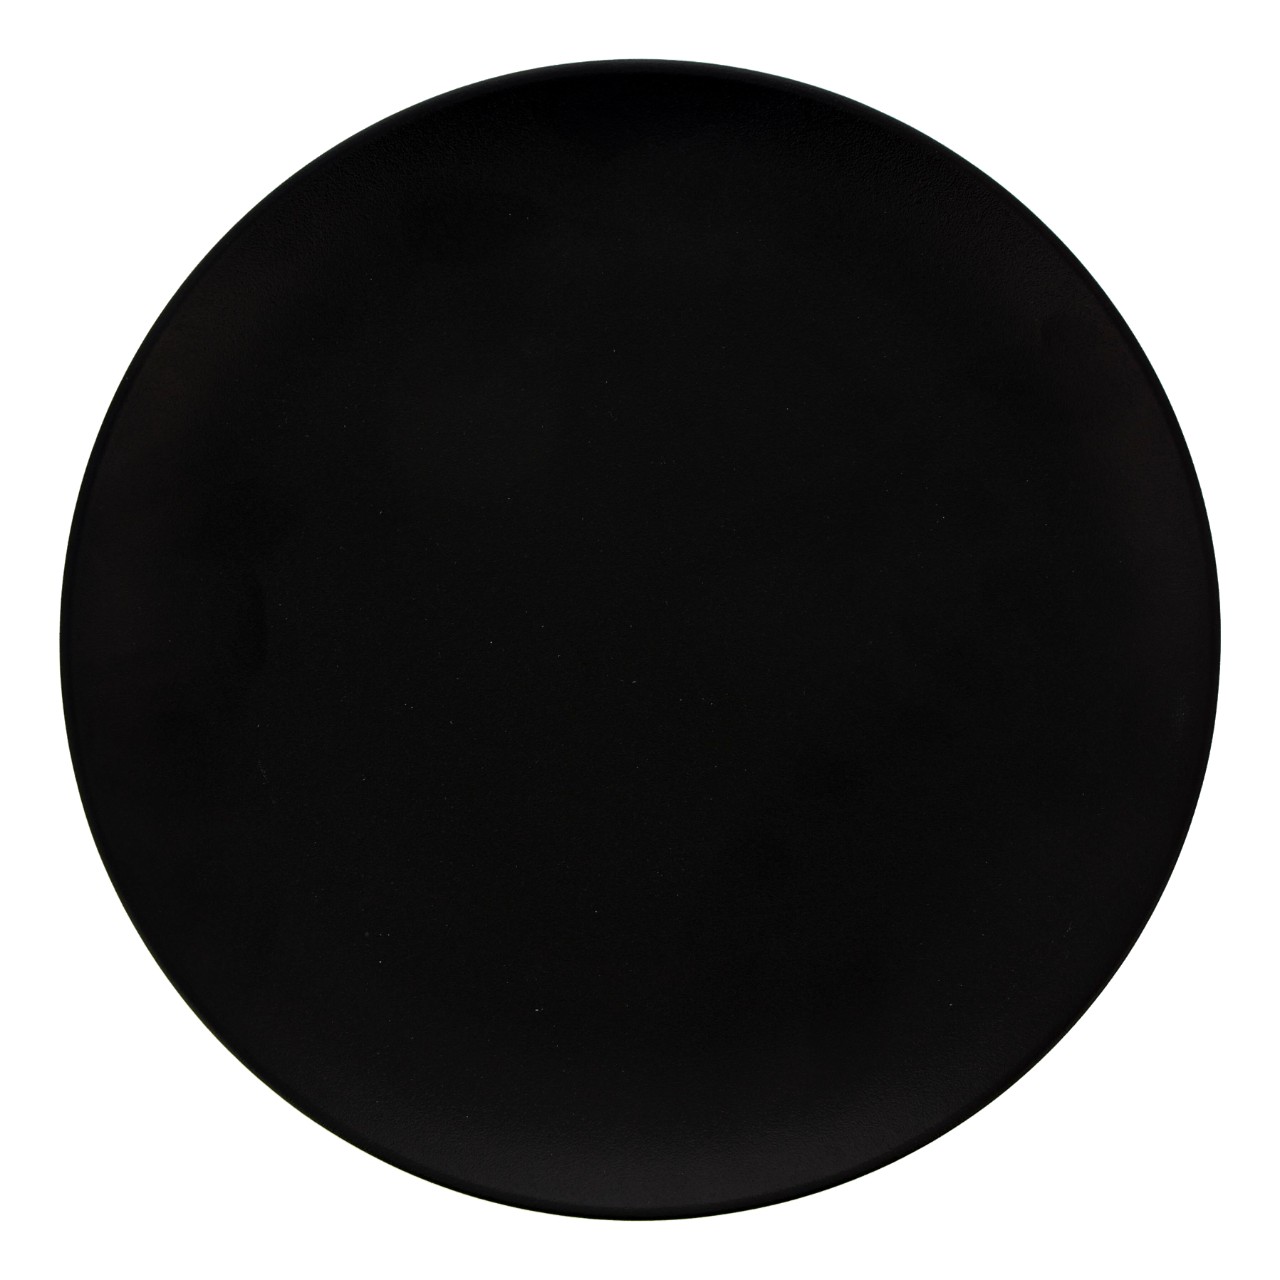 Bord rond zwart, 27 cm